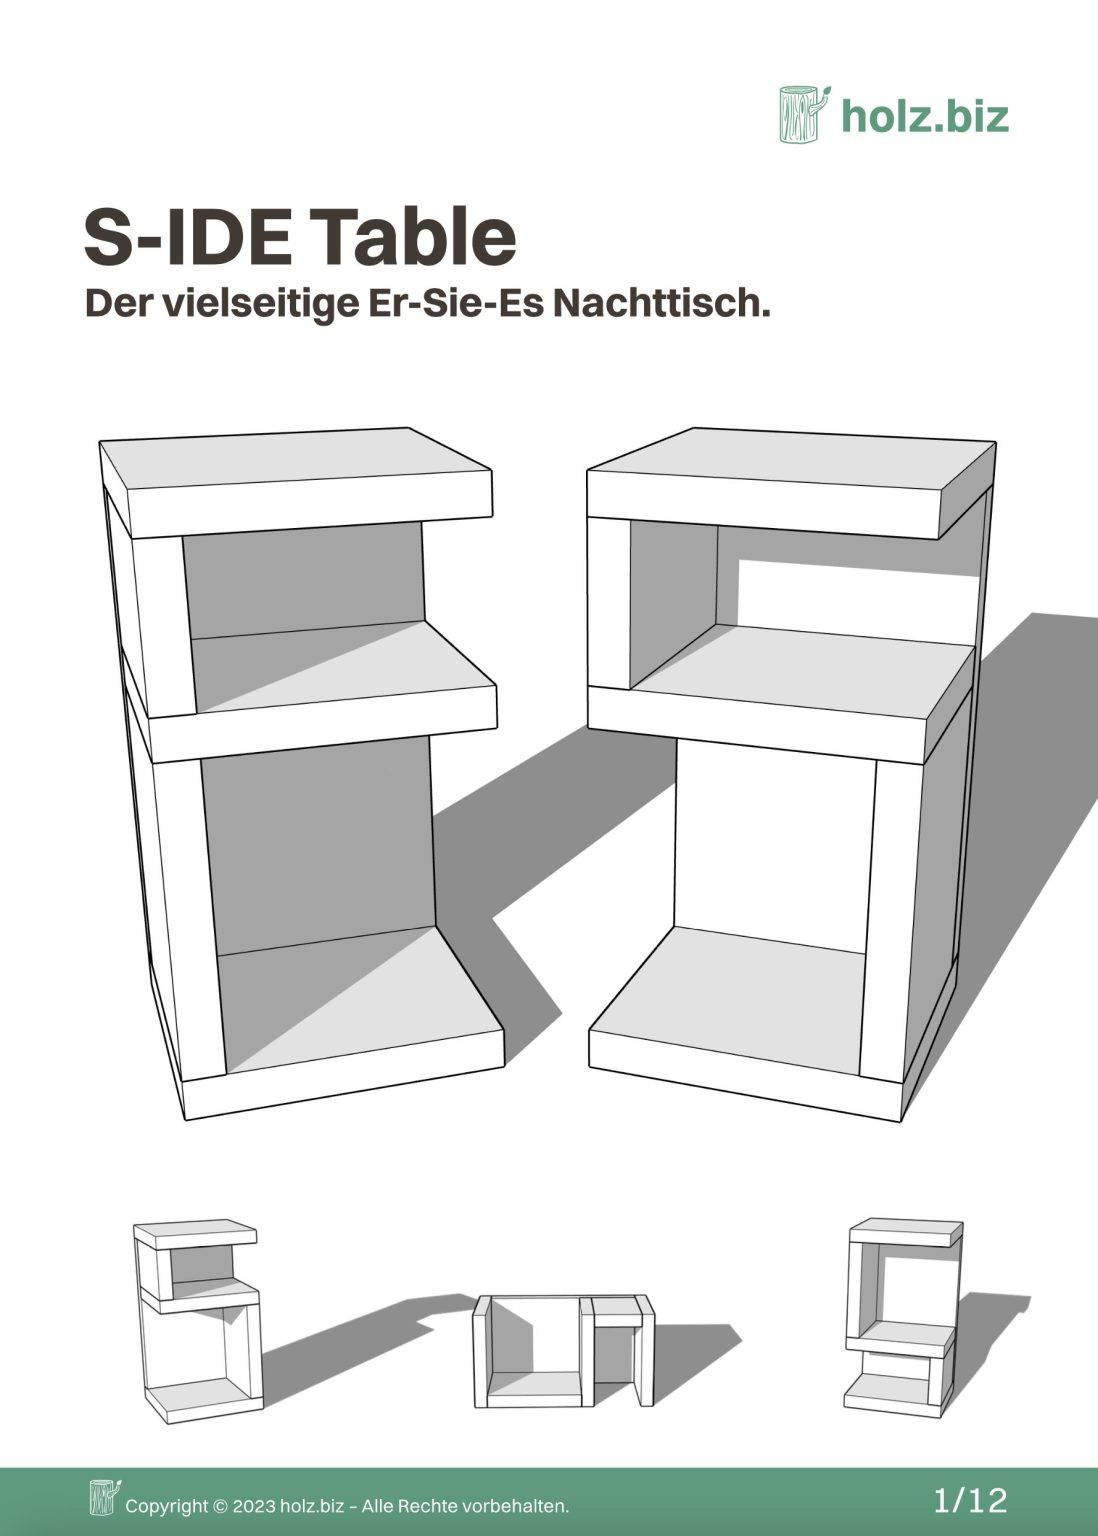 SIDE Table DIY Holz Nachttisch selbst bauen Bauplan Cover